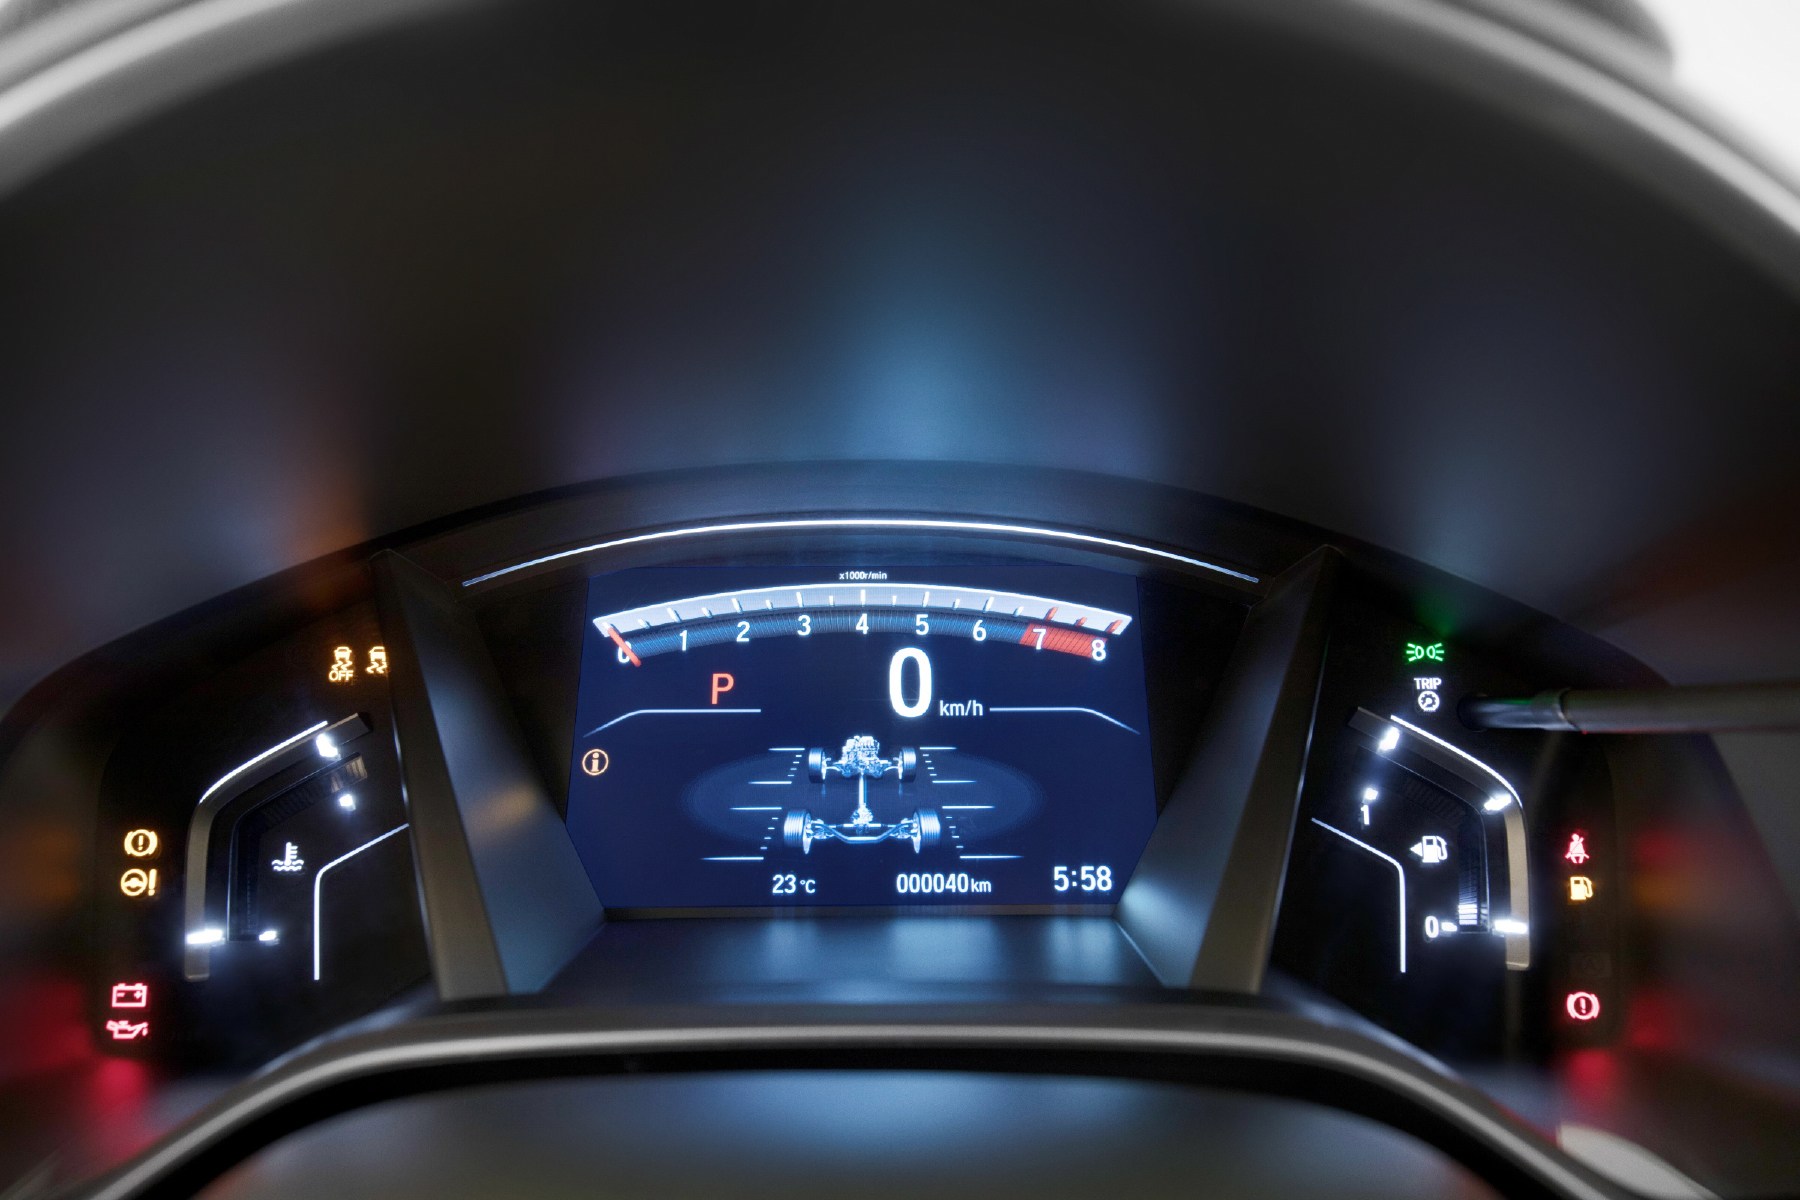 Honda cr панель. Приборная панель Honda CRV 2020. Honda CRV 2017 приборная панель. Цифровая приборная панель Honda CRV 5. Цифровая панель Honda CR V.